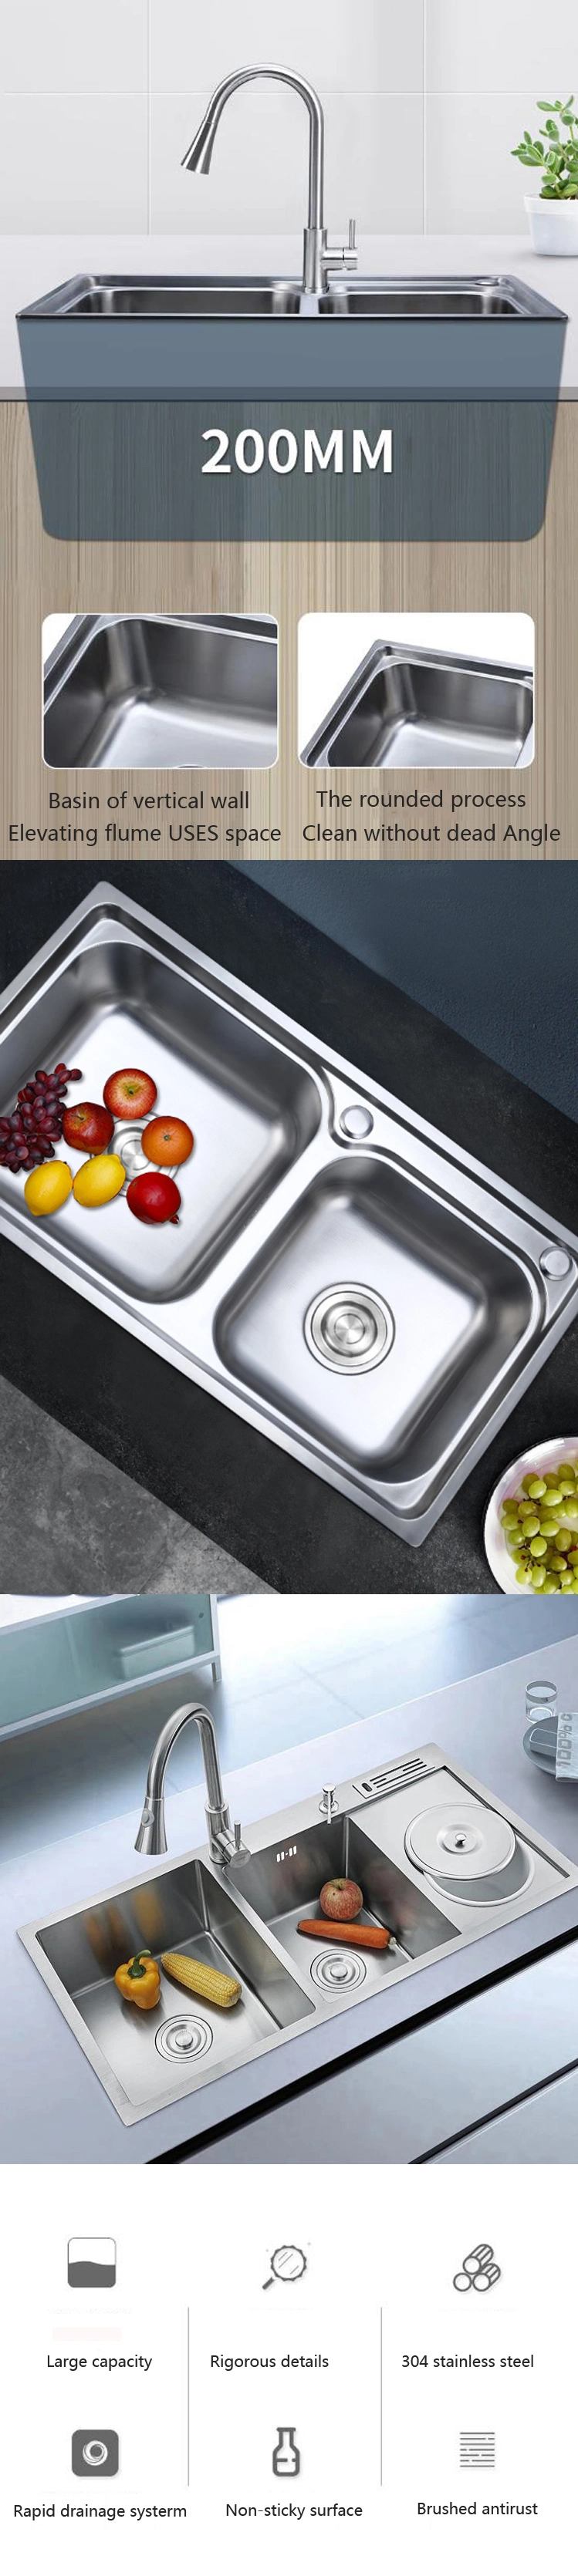 Discount Deep Bowl Professional Design Single Bowl Undermount Single Bowl Stainless Steel Kitchen Sink